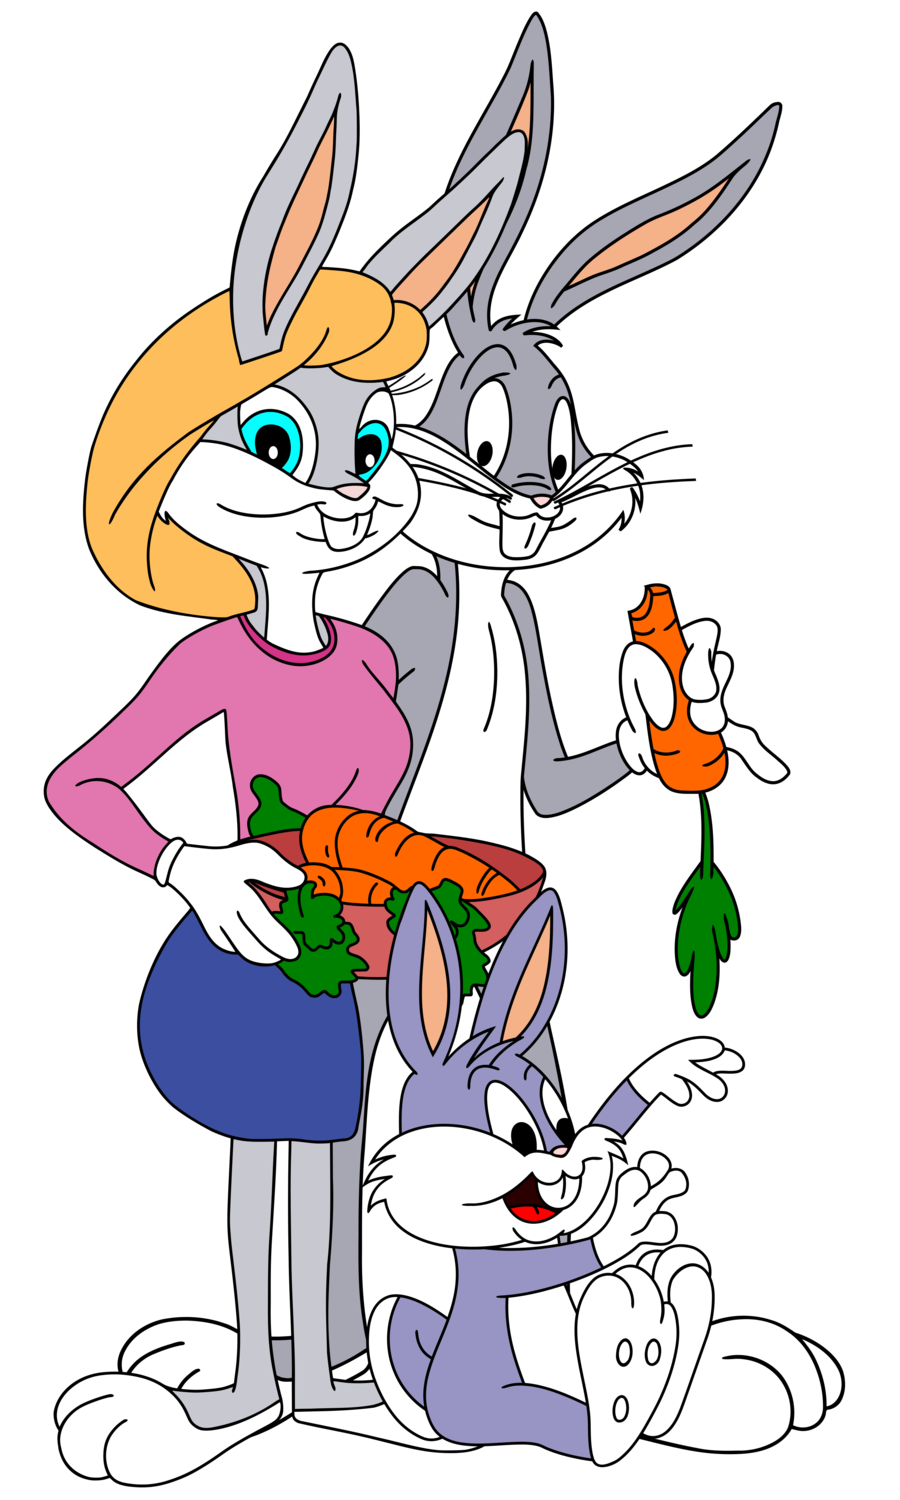 Bugs Bunny's family